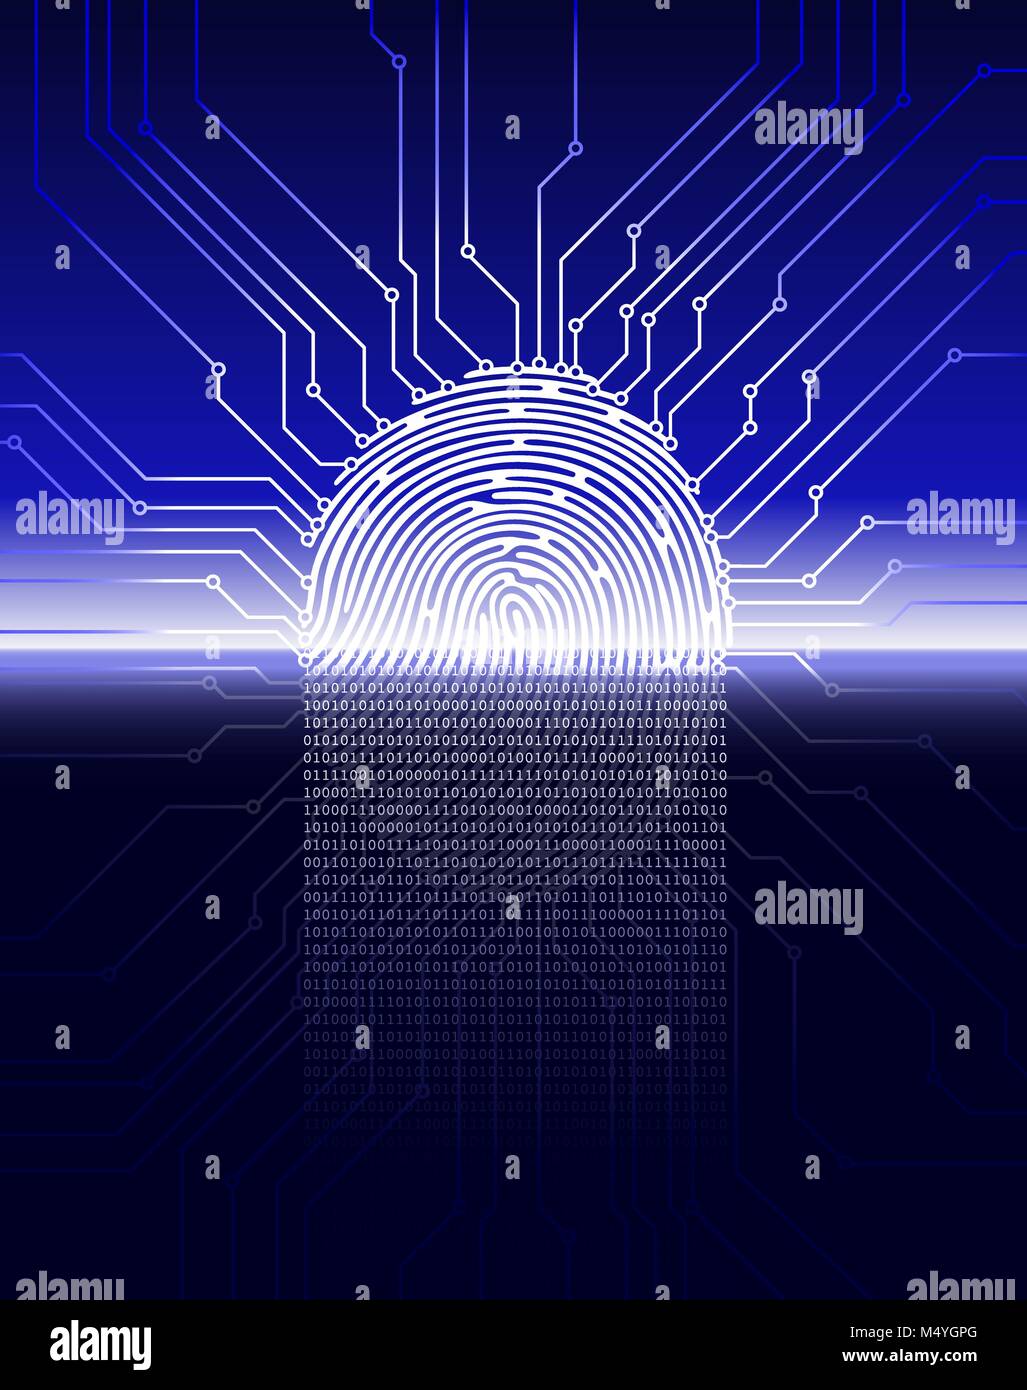 Fingerprint scanning, digital biometric security system, data protection, dark blue background, vector illustration Stock Vector